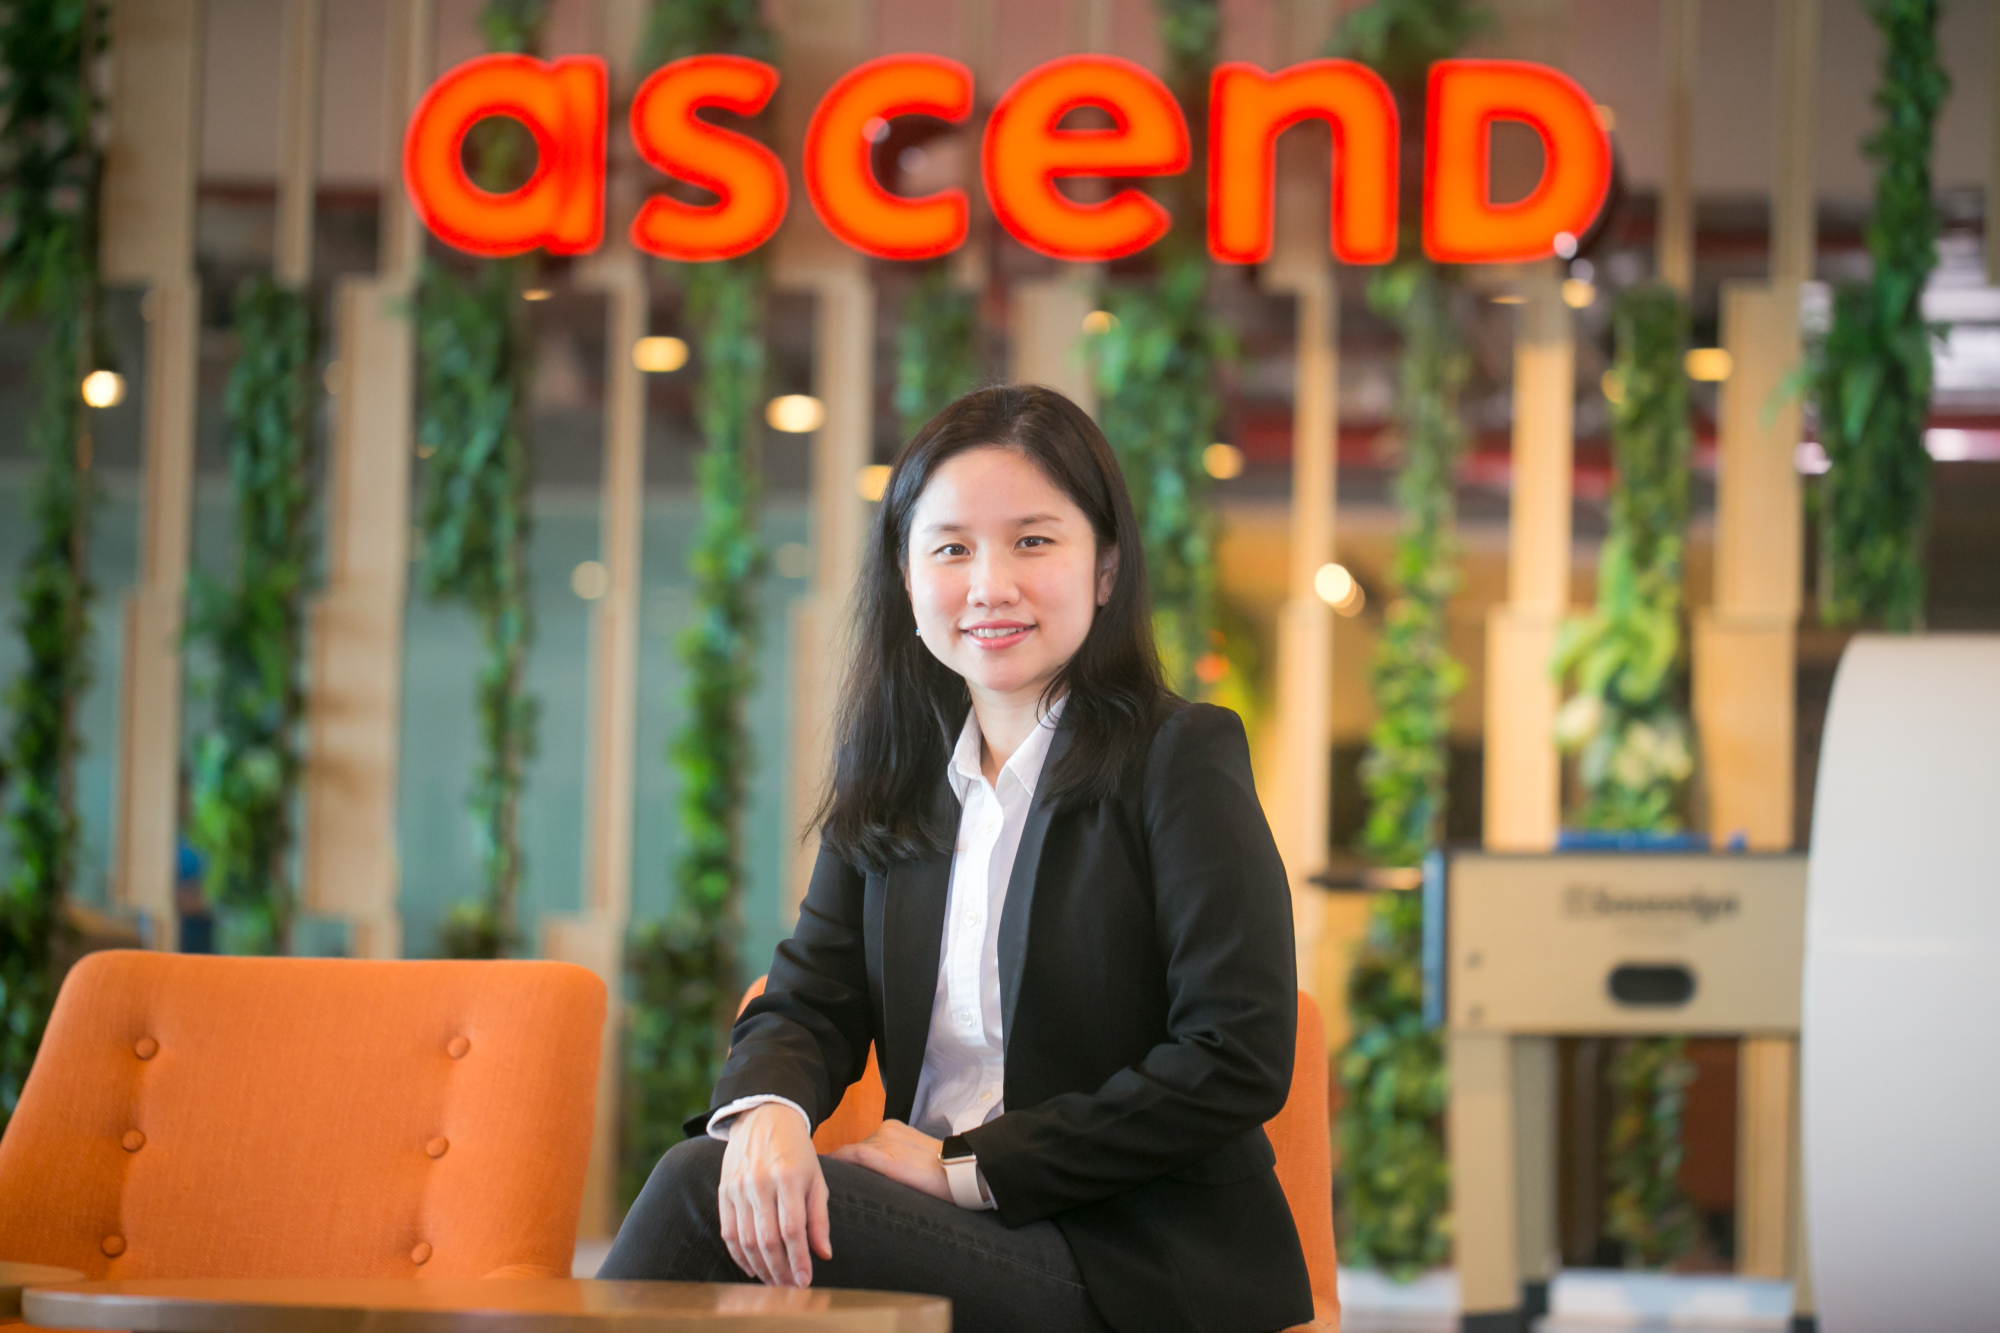 ascend money becomes thailand's first fintech unicorn | krasia